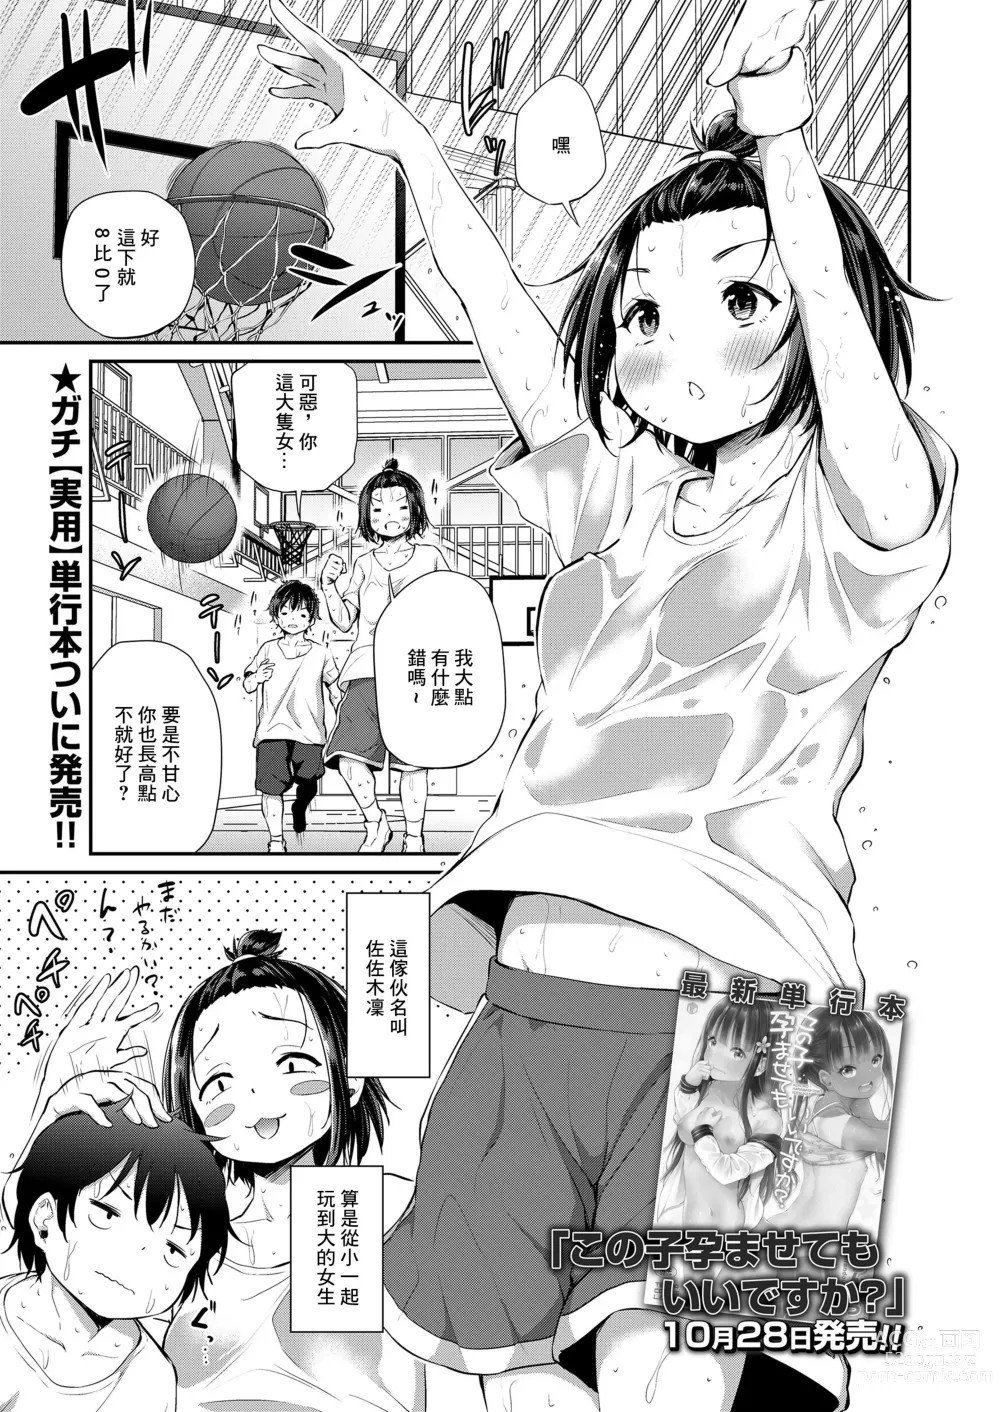 Page 1 of manga Dekoboko 1ON1